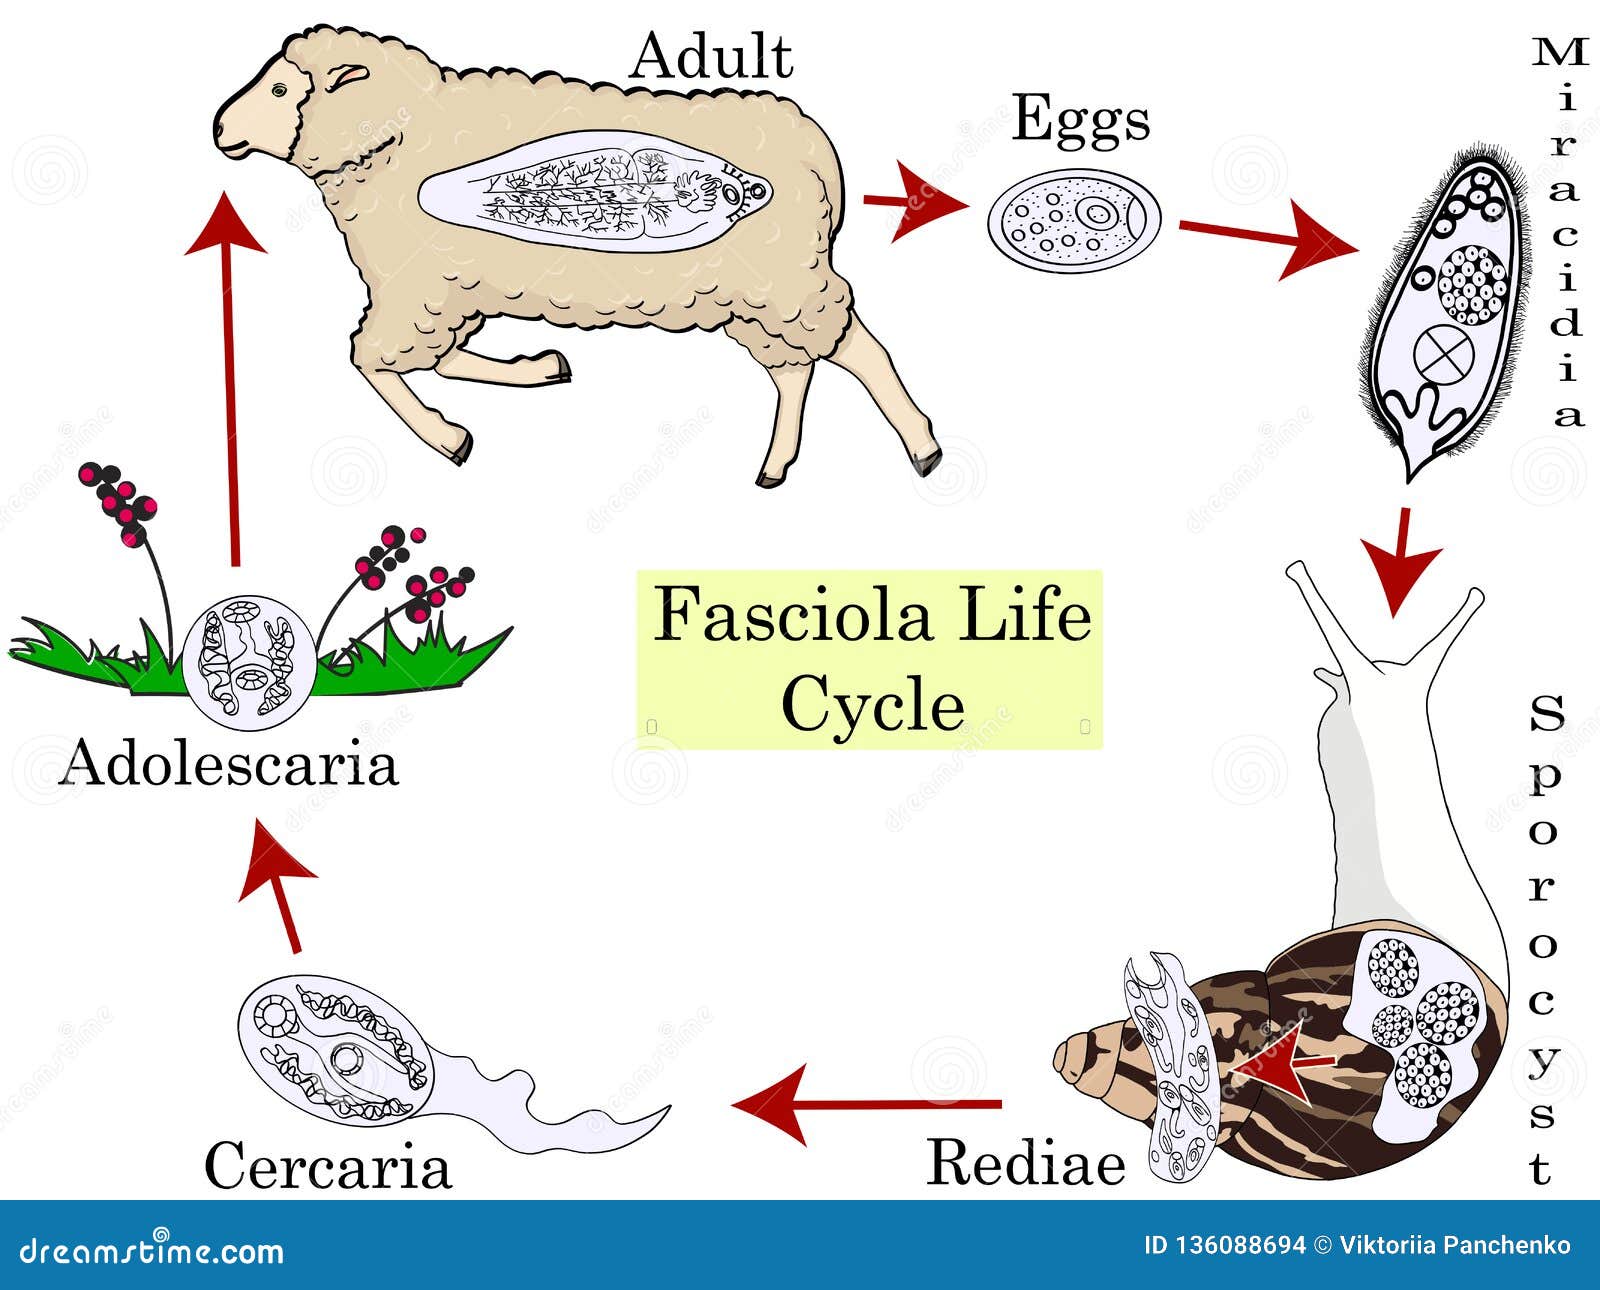 cicluri de fascioliasis diagrama ciclului de dezvoltare pinworm